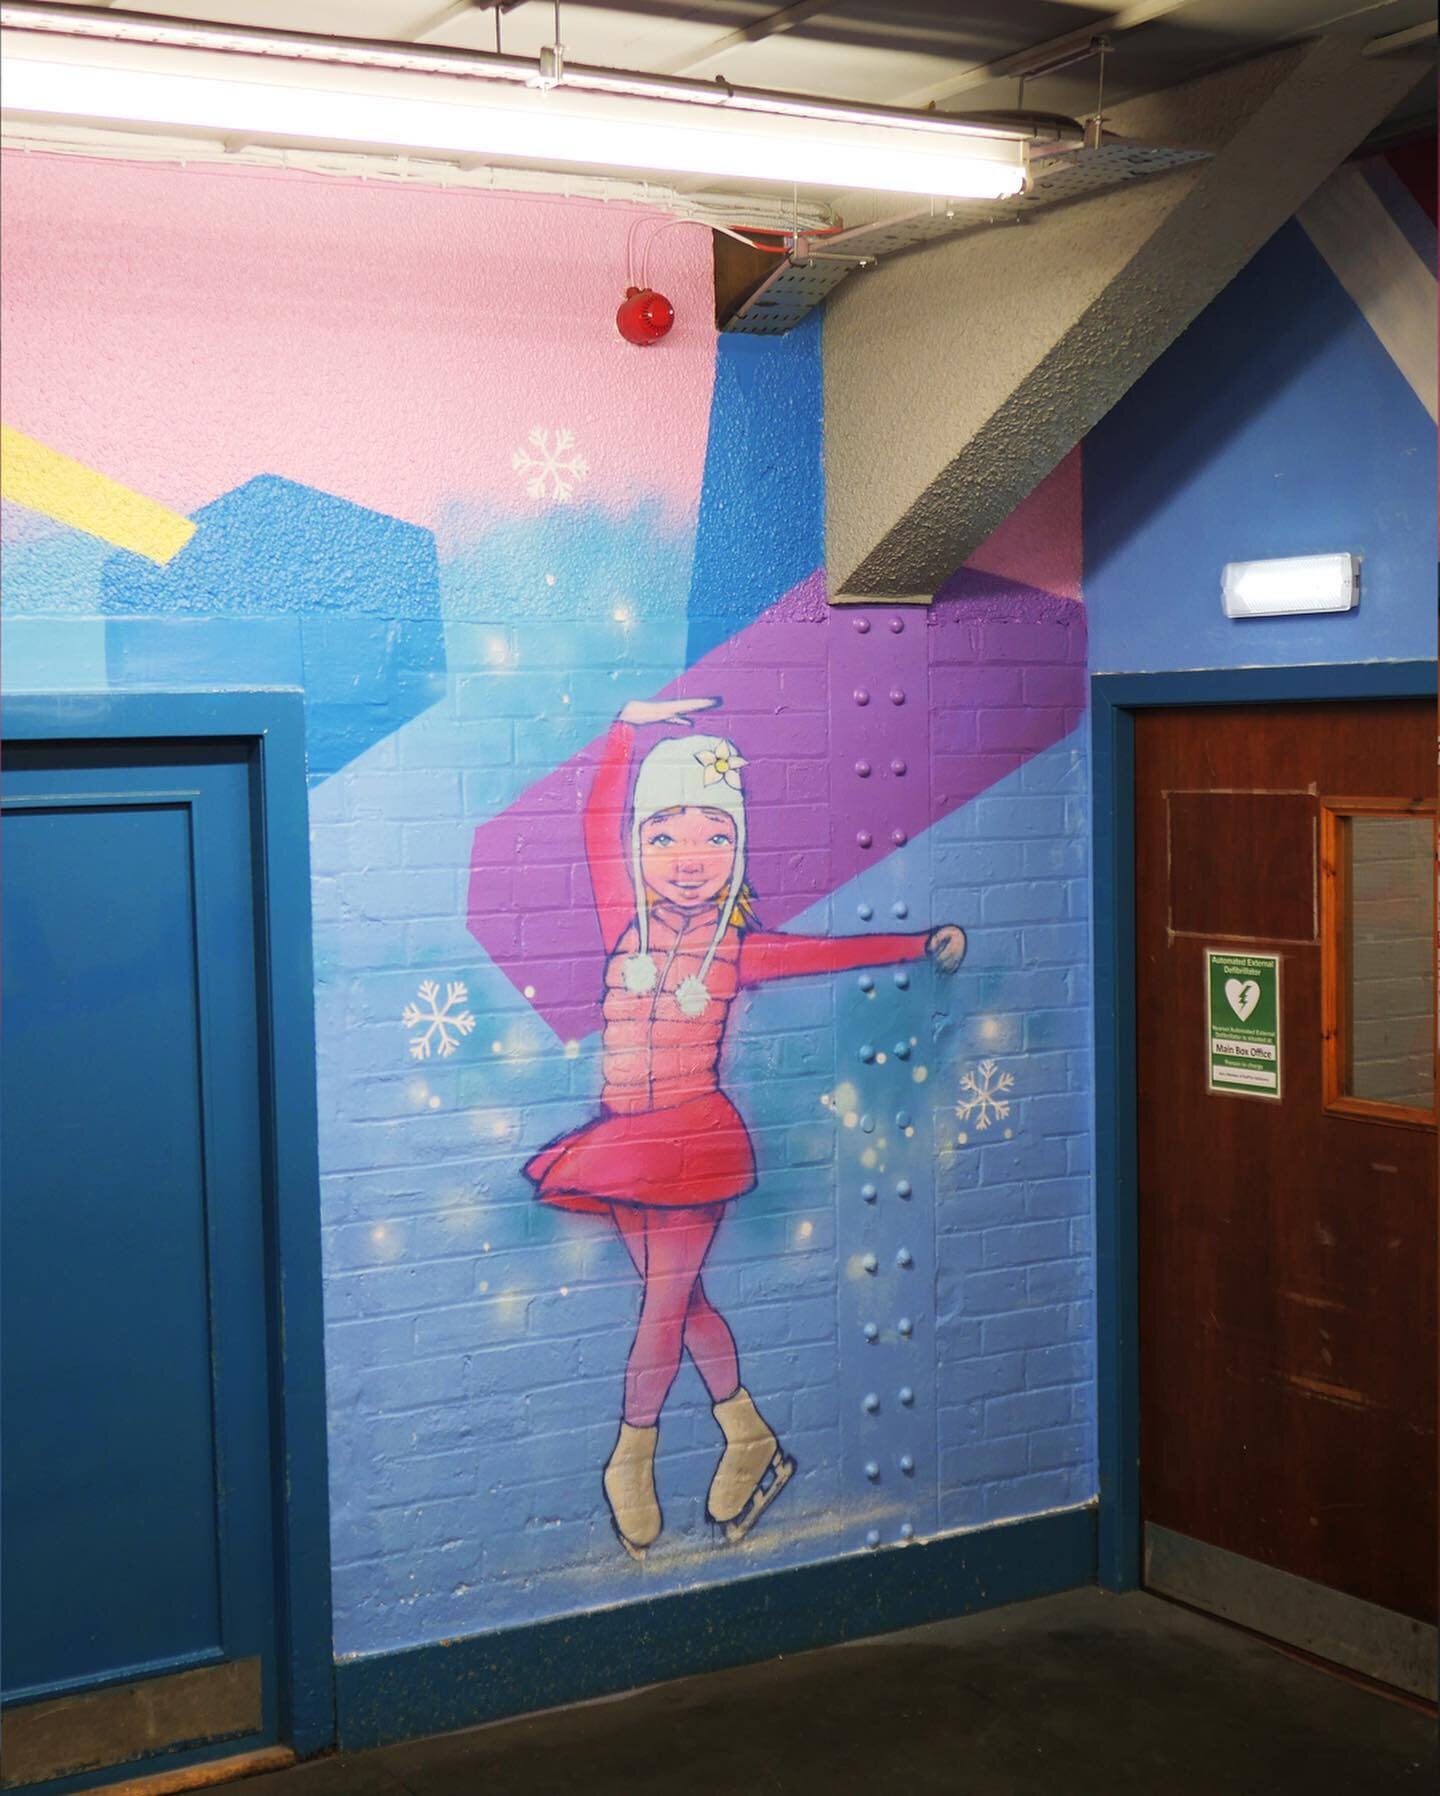 @murrayfield_ice_arena Boot Room Mural , fun piece mixing the styles @elphone &amp; @trenchone .
#murrayfield 

#edinburgh #mural #iceskating